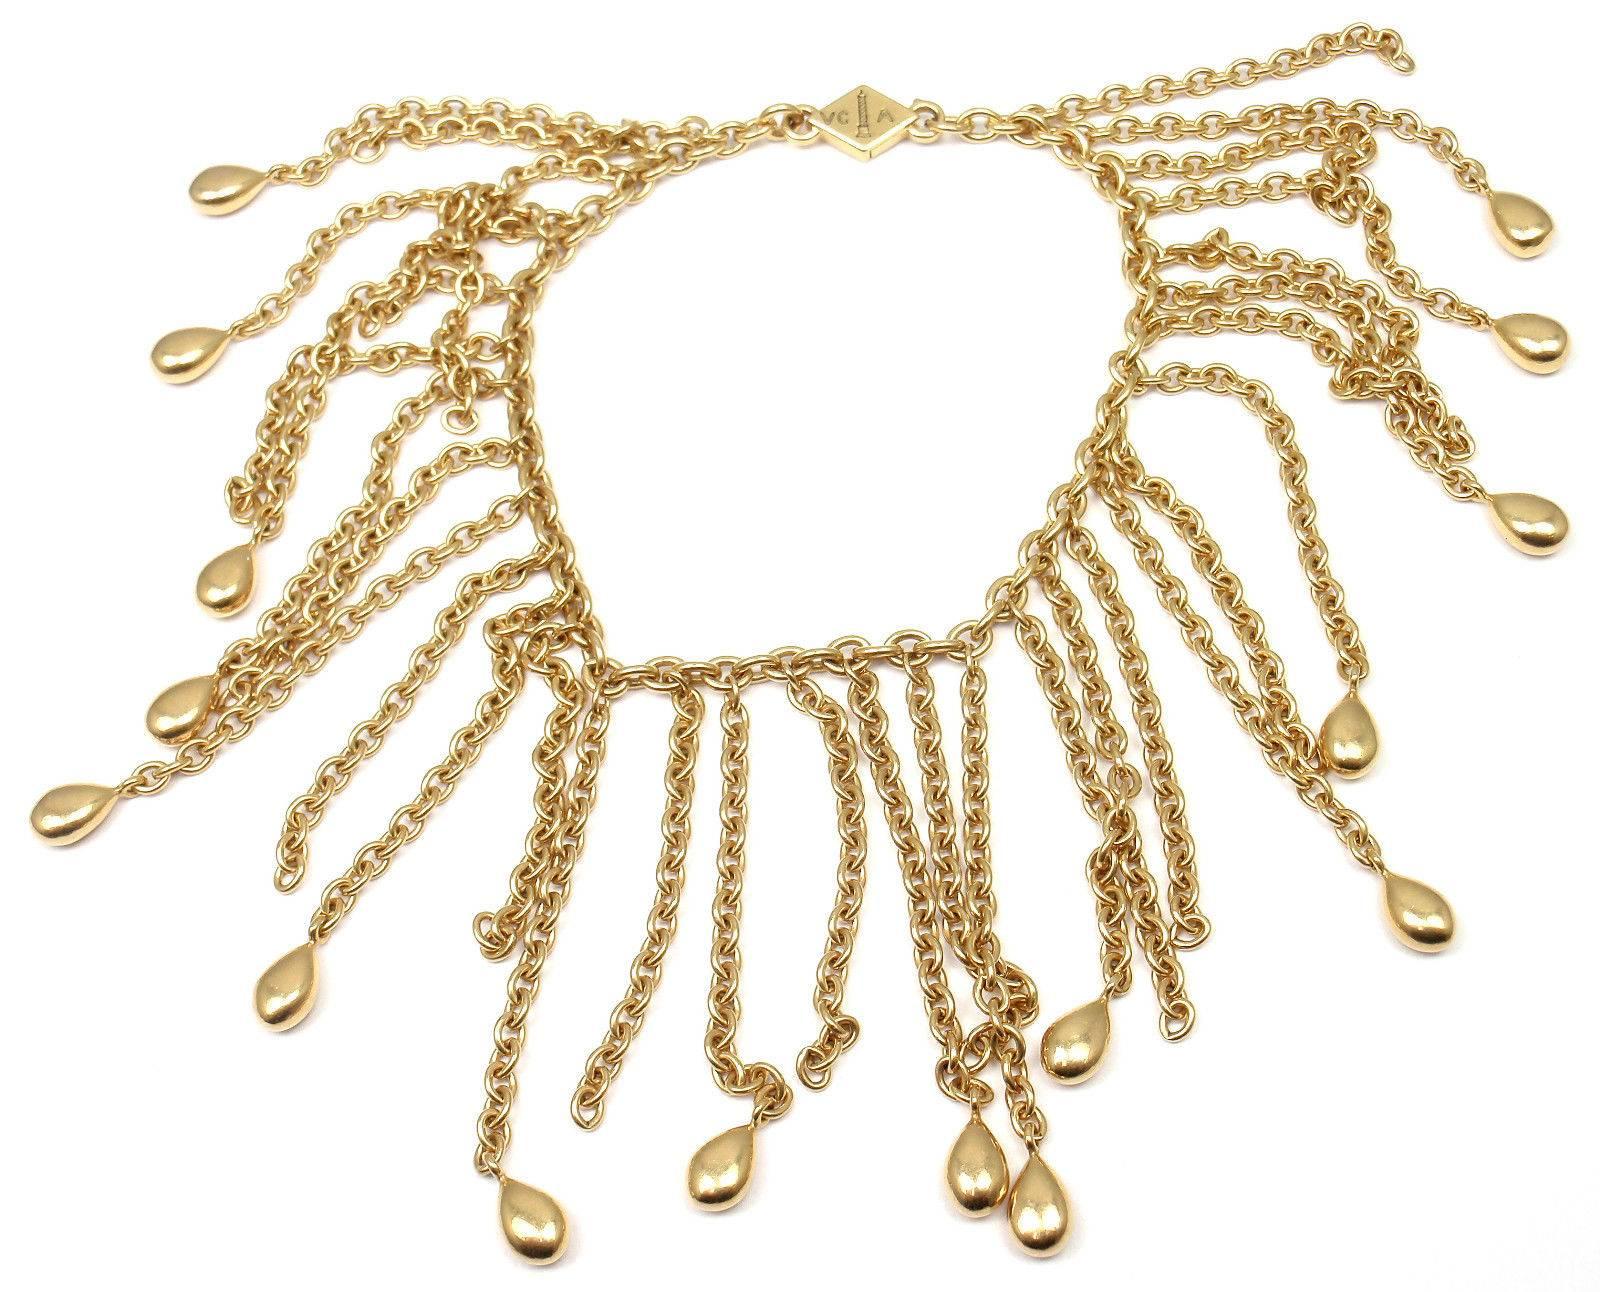 18k Yellow Gold Link Bracelet by Van Cleef & Arpels.

Details:
Length: 6.5